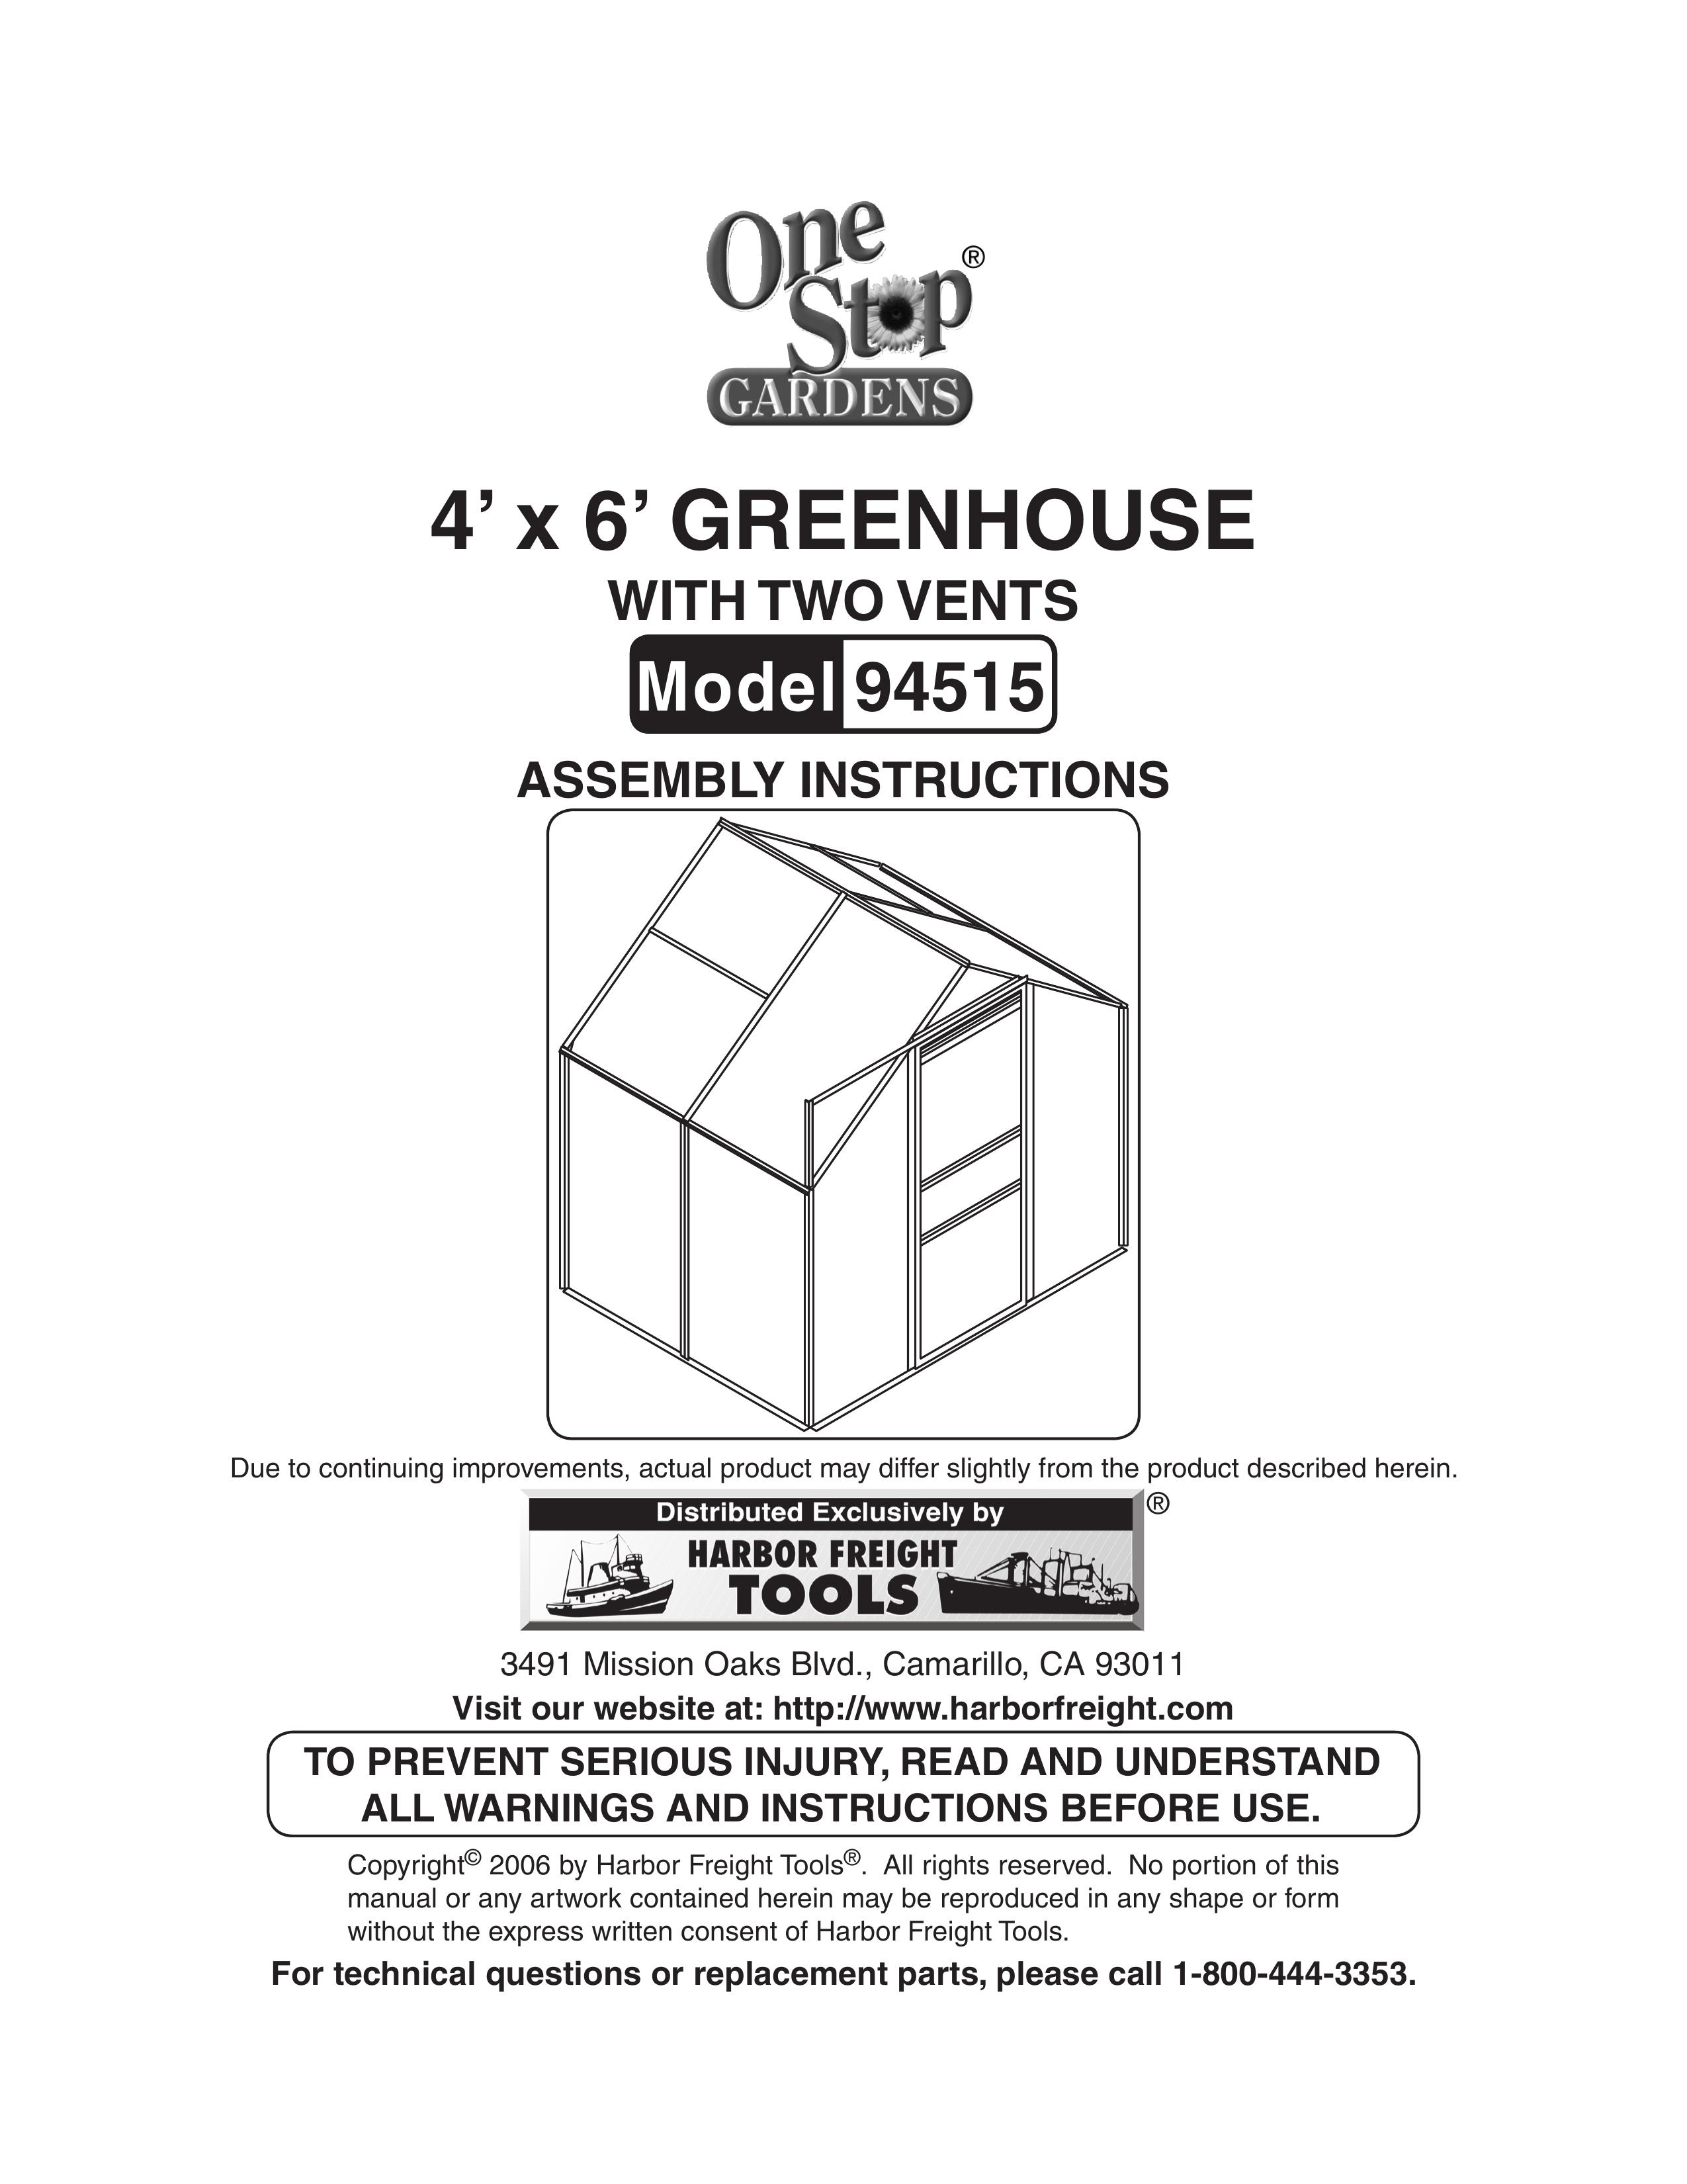 Harbor Freight Tools 94515 Greenhouse Kit User Manual